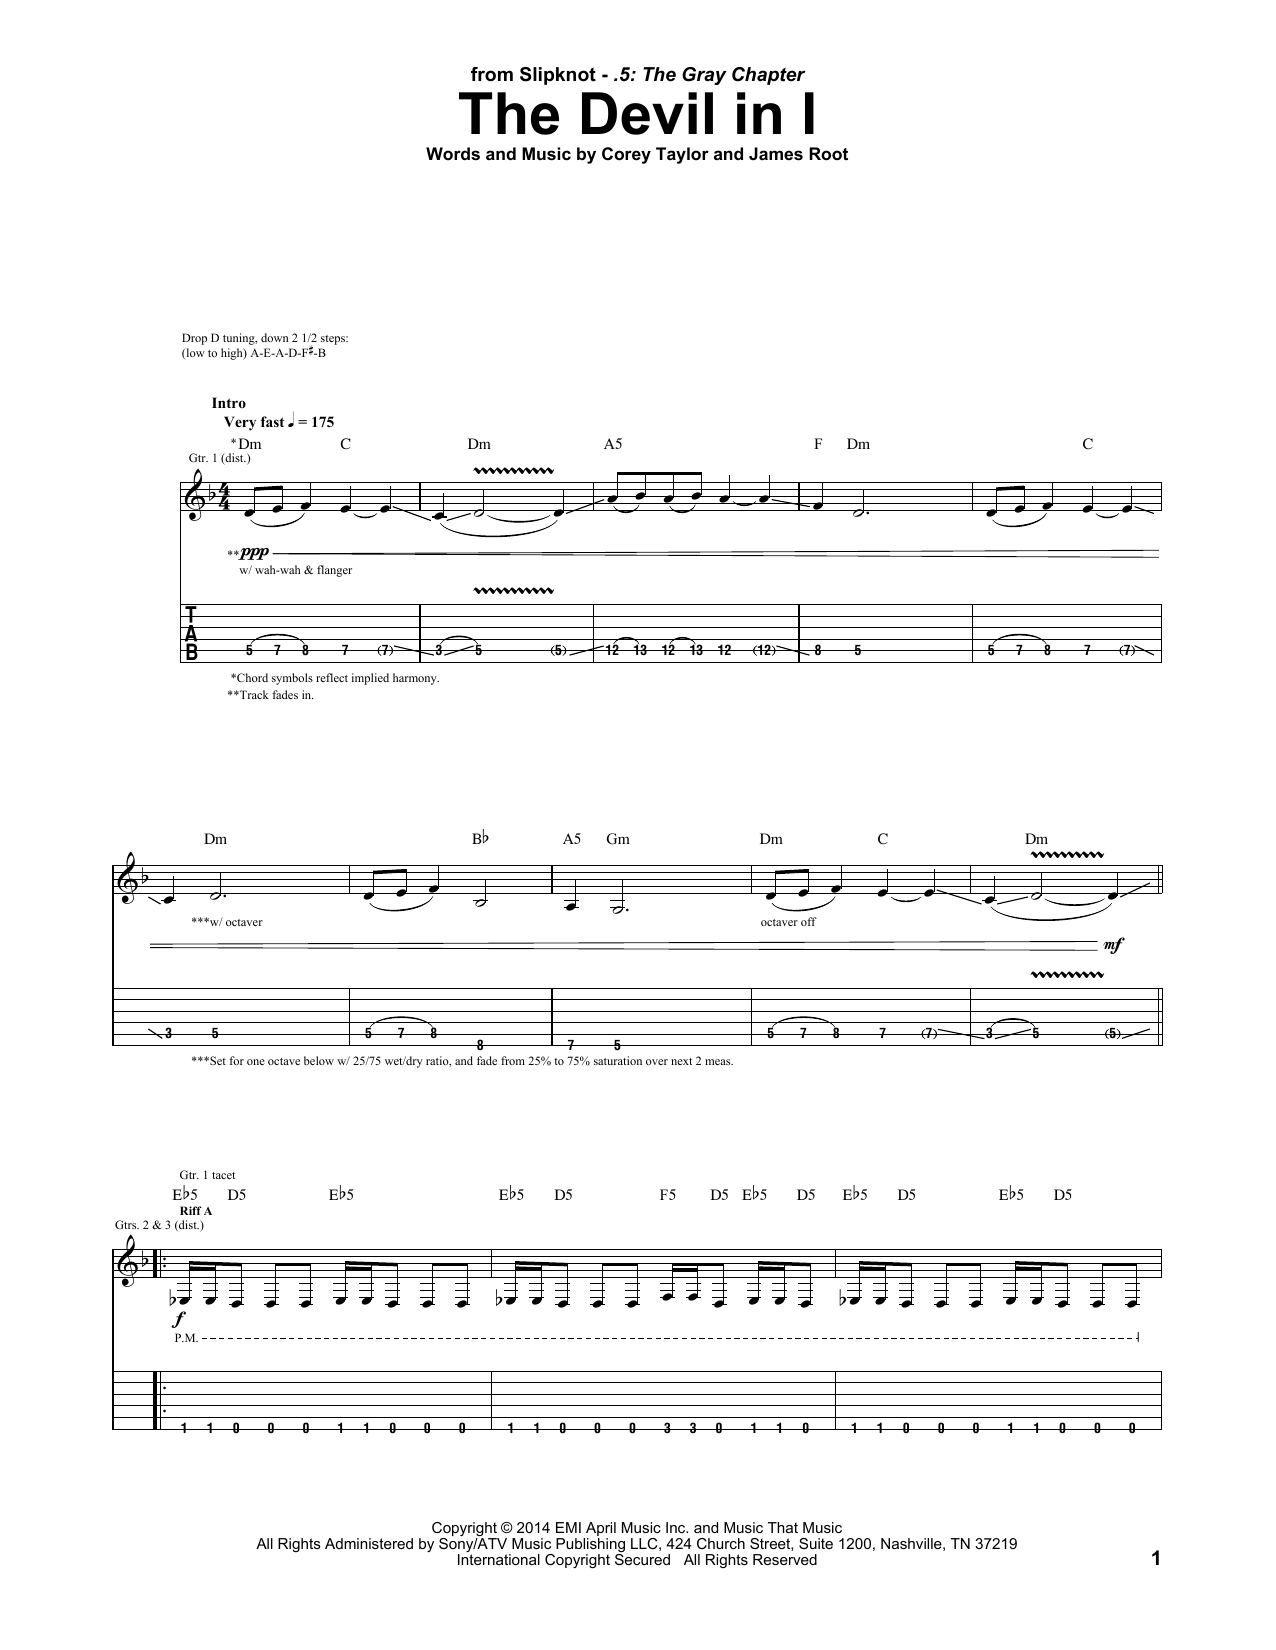 Slipknot The Devil In I Sheet Music Notes & Chords for Guitar Tab (Single Guitar) - Download or Print PDF